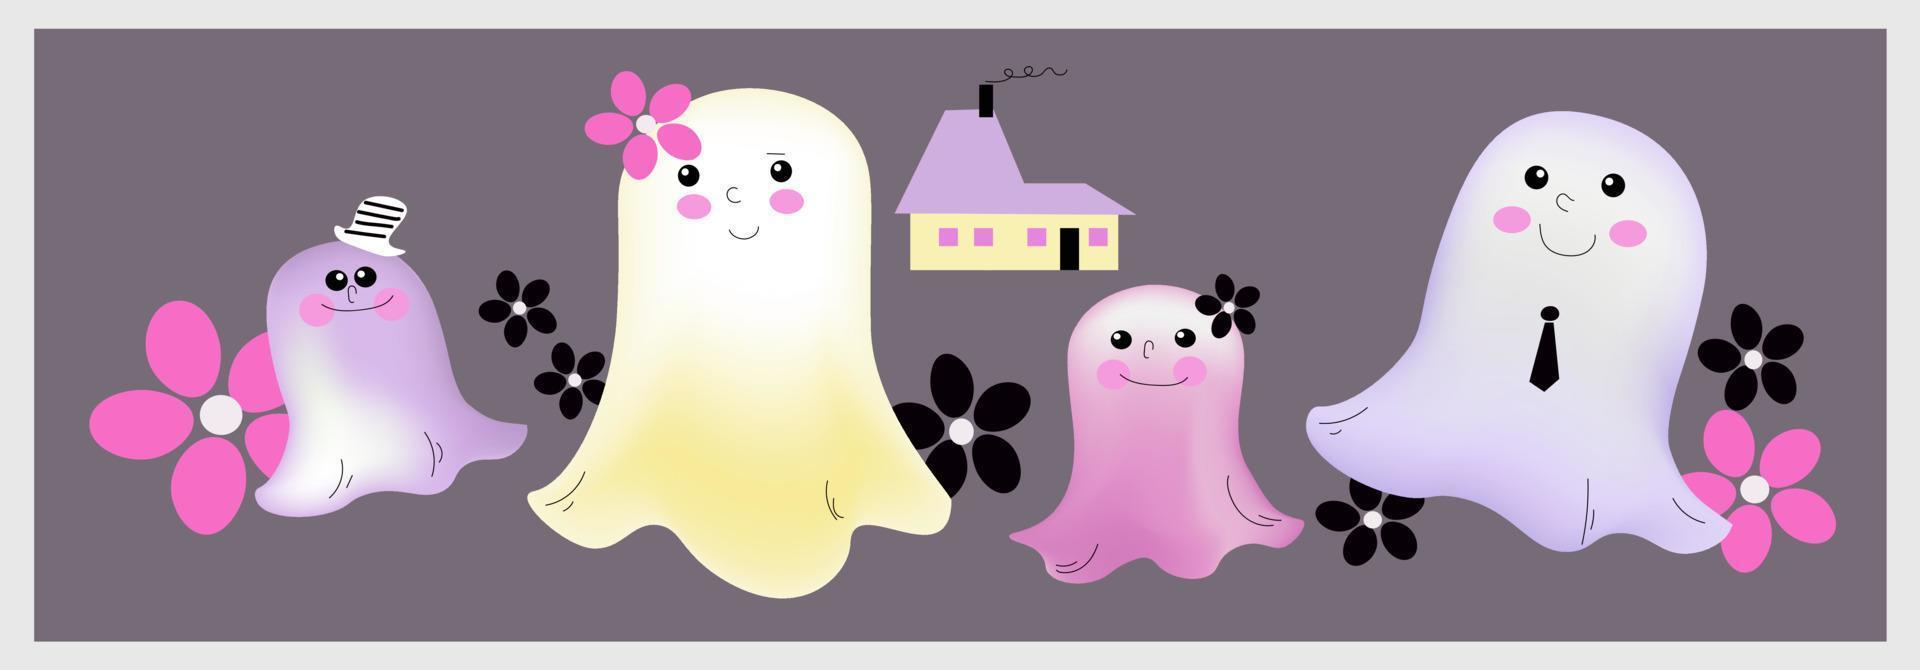 conjunto de fantasmas felices divertidos lindos kawaii, vector